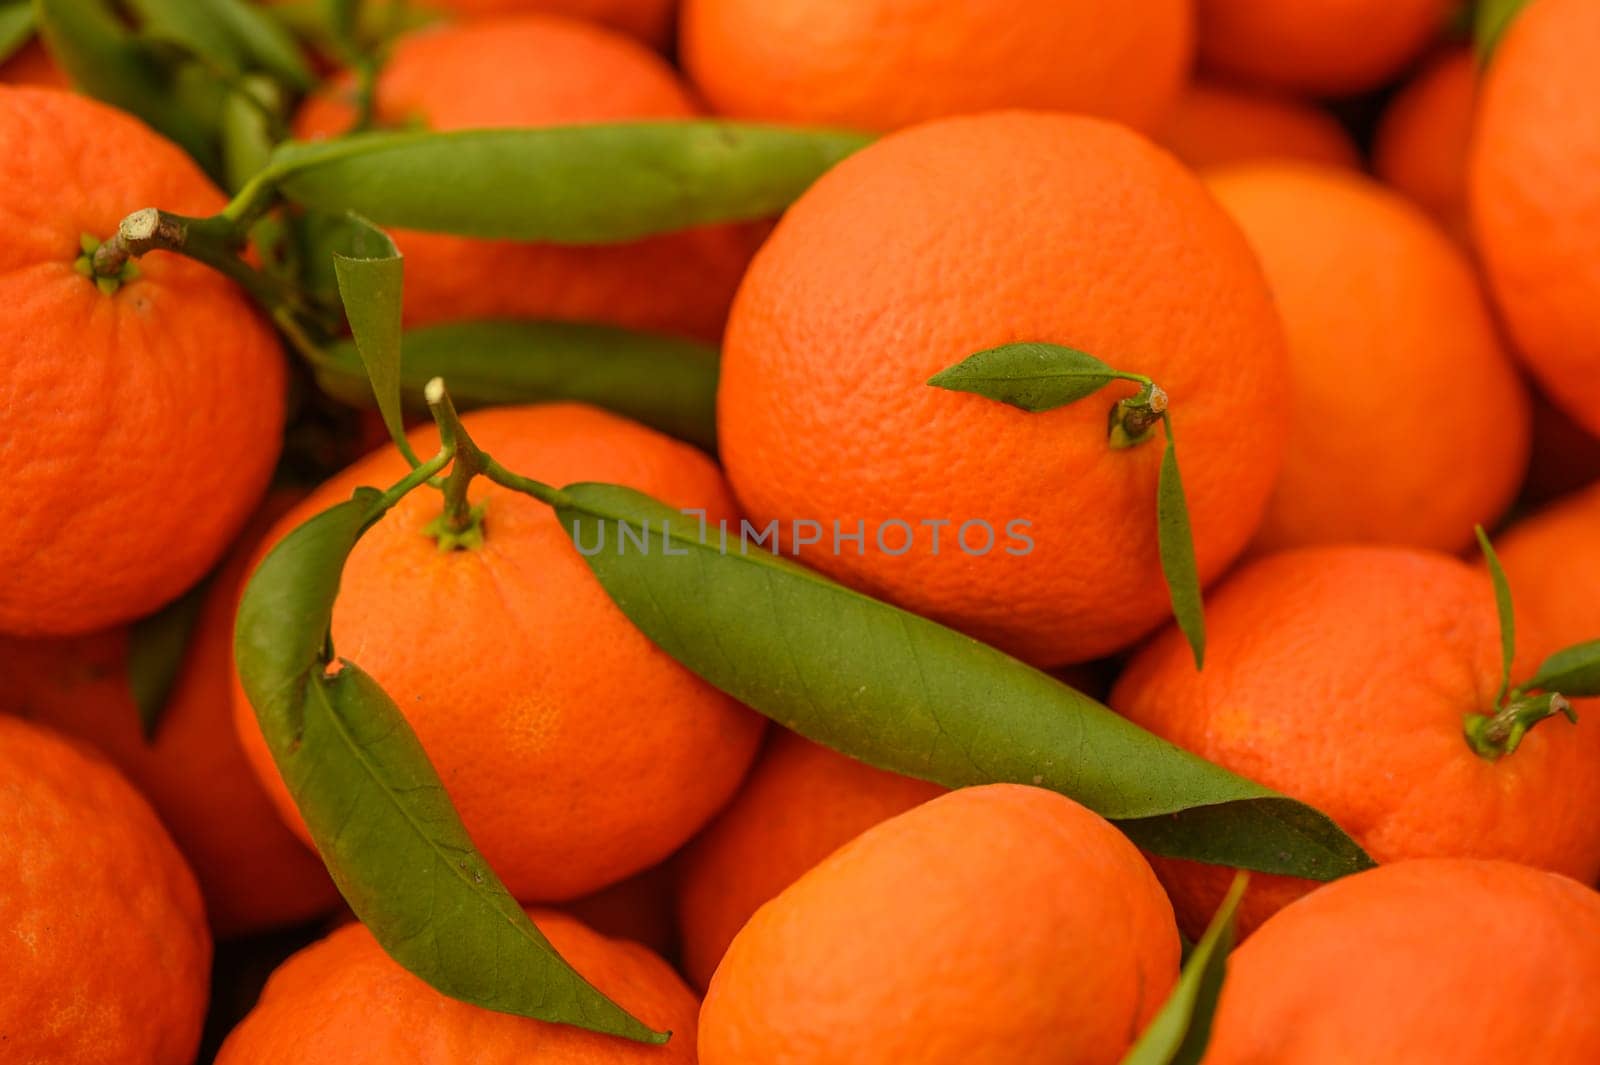 juicy fresh tangerines in boxes for sale in Cyprus in winter 23